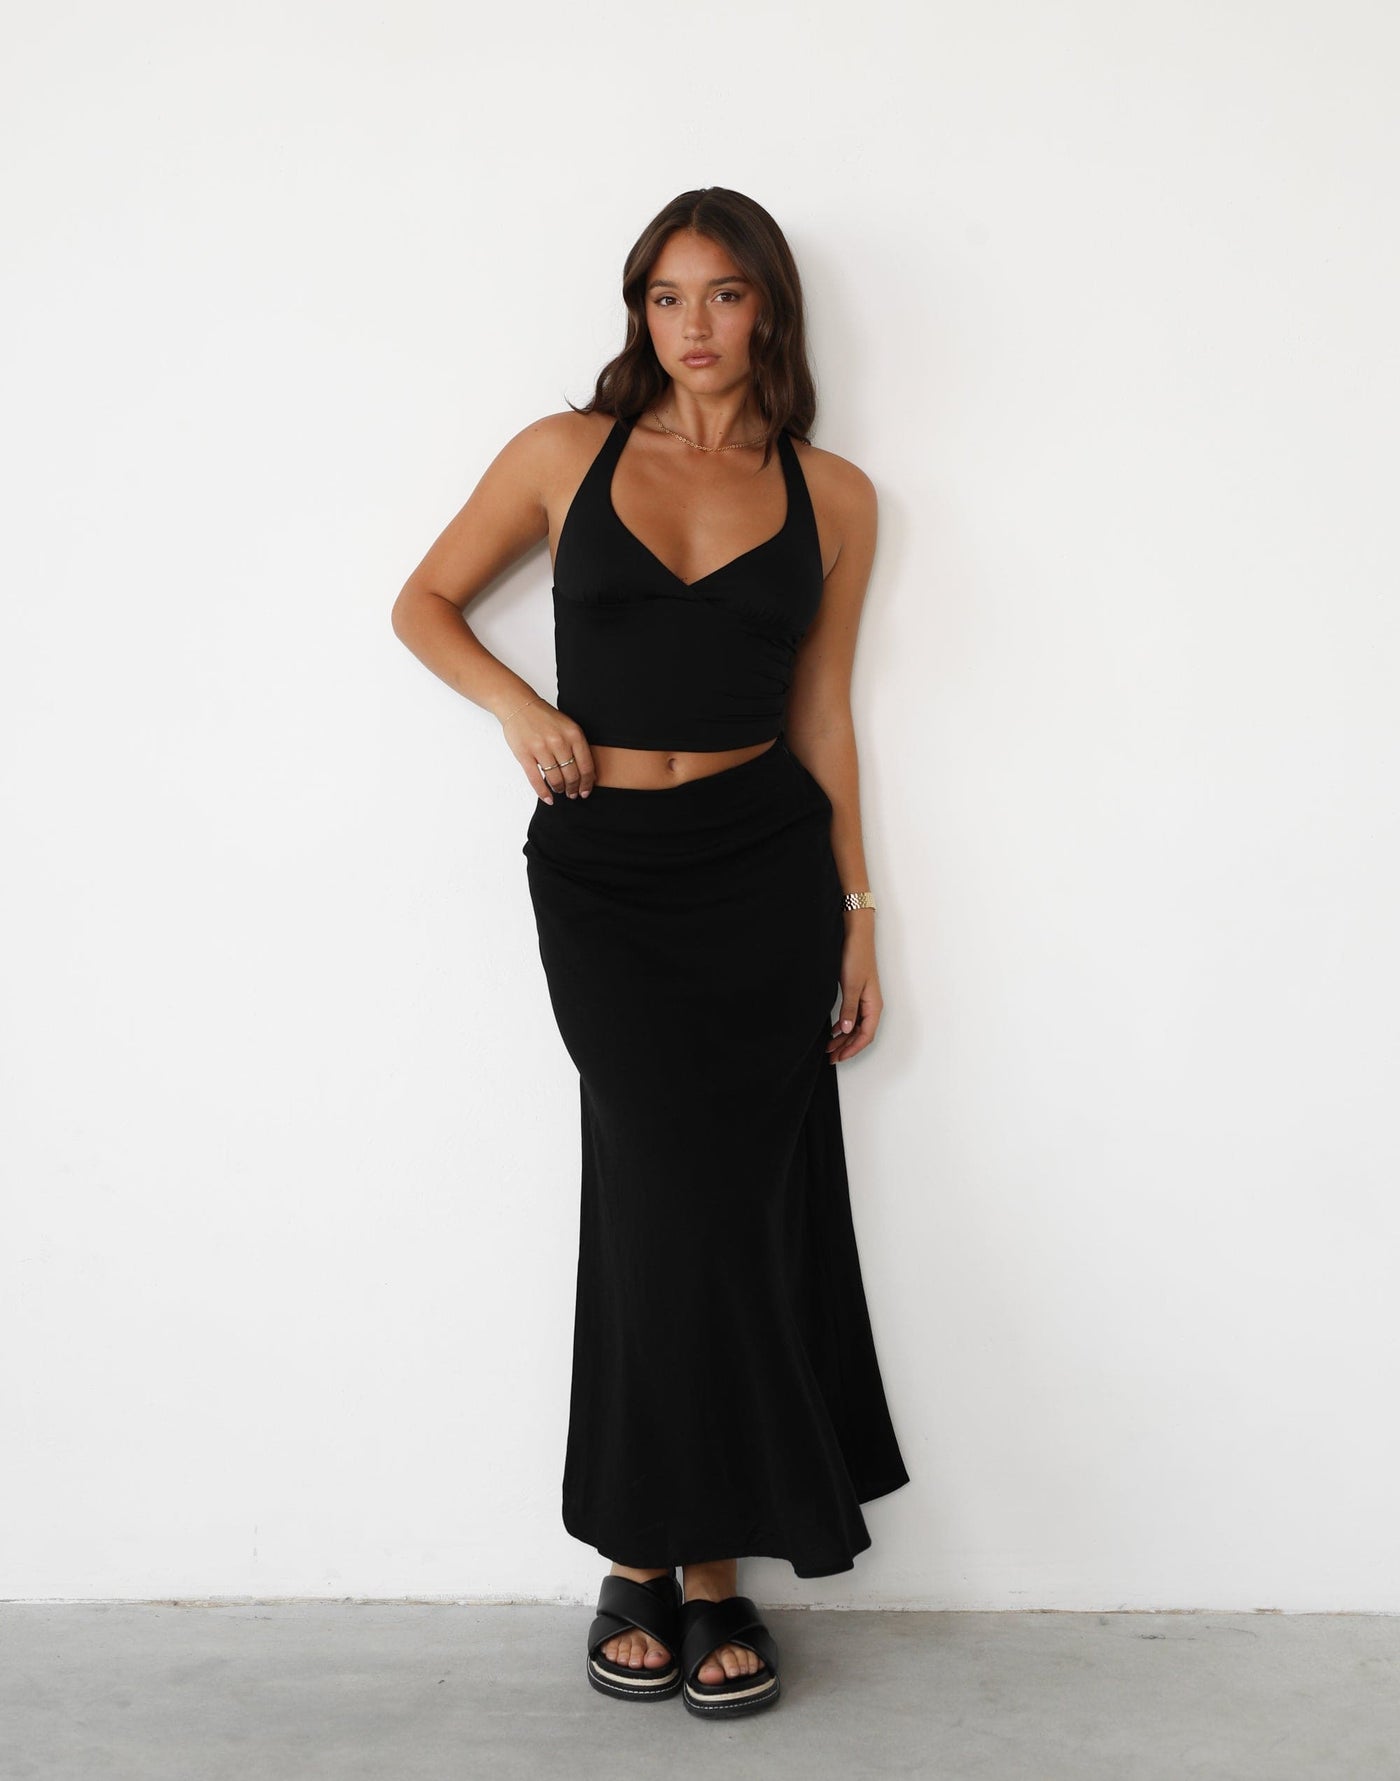 Billie Top (Black) | Charcoal Exclusive - Basic Black Halter Top - Women's Top - Charcoal Clothing